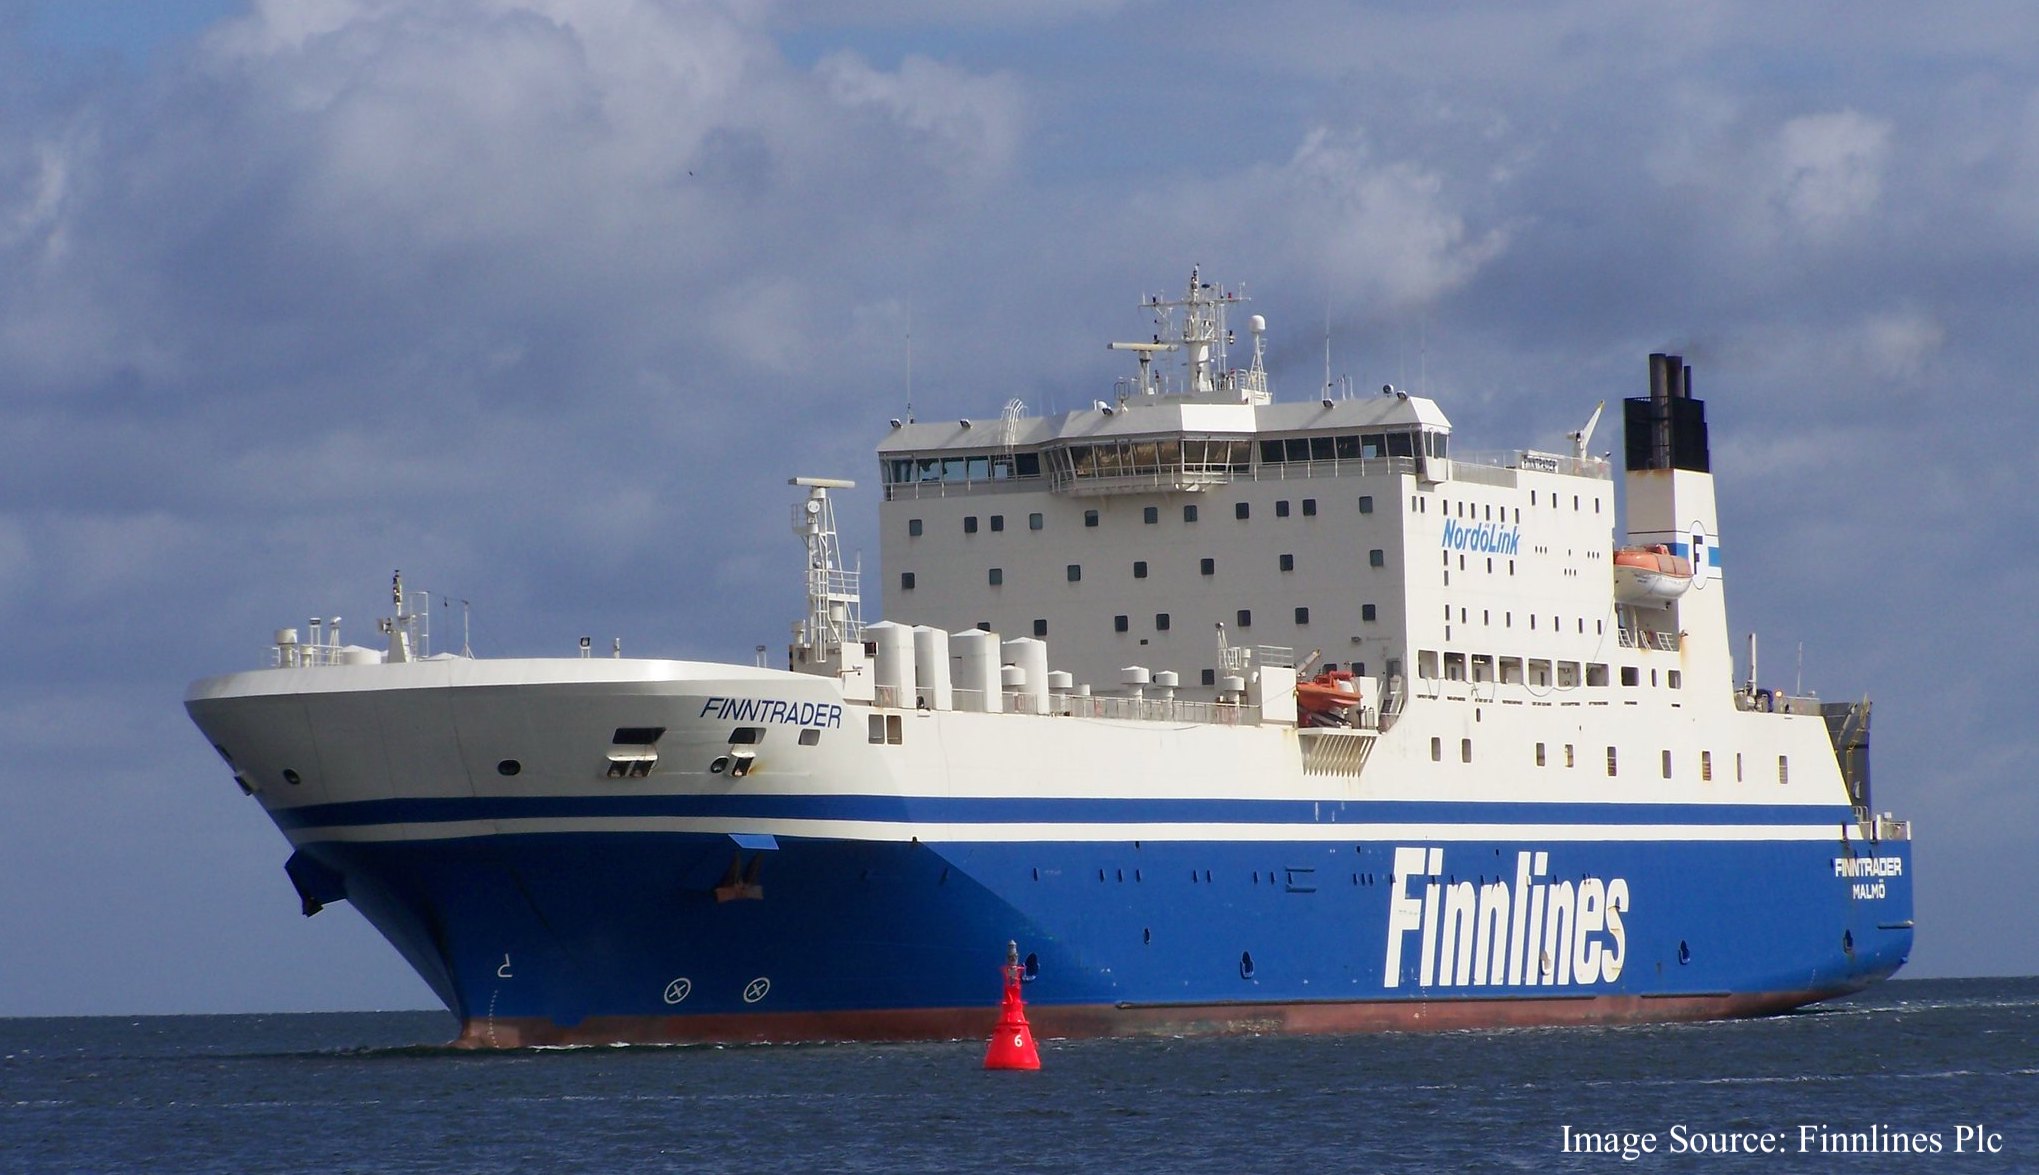 Foto af Finnlines - Finntrader skib